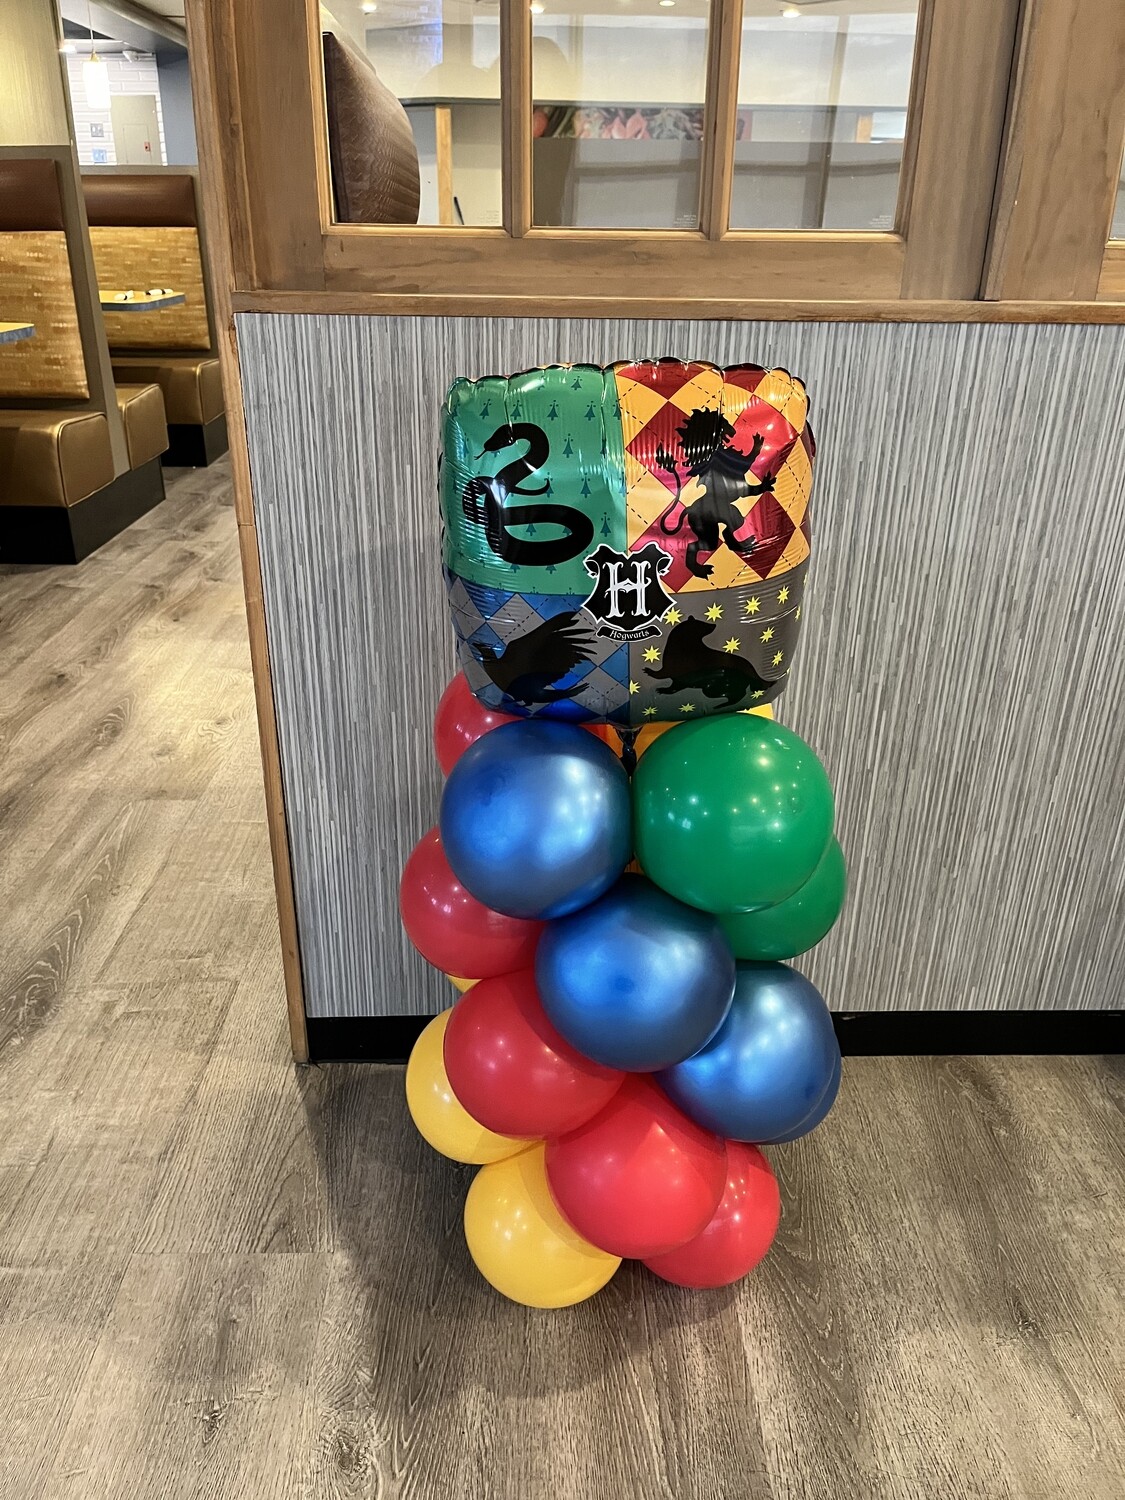 Hogwarts (or any other theme) balloon arrangement